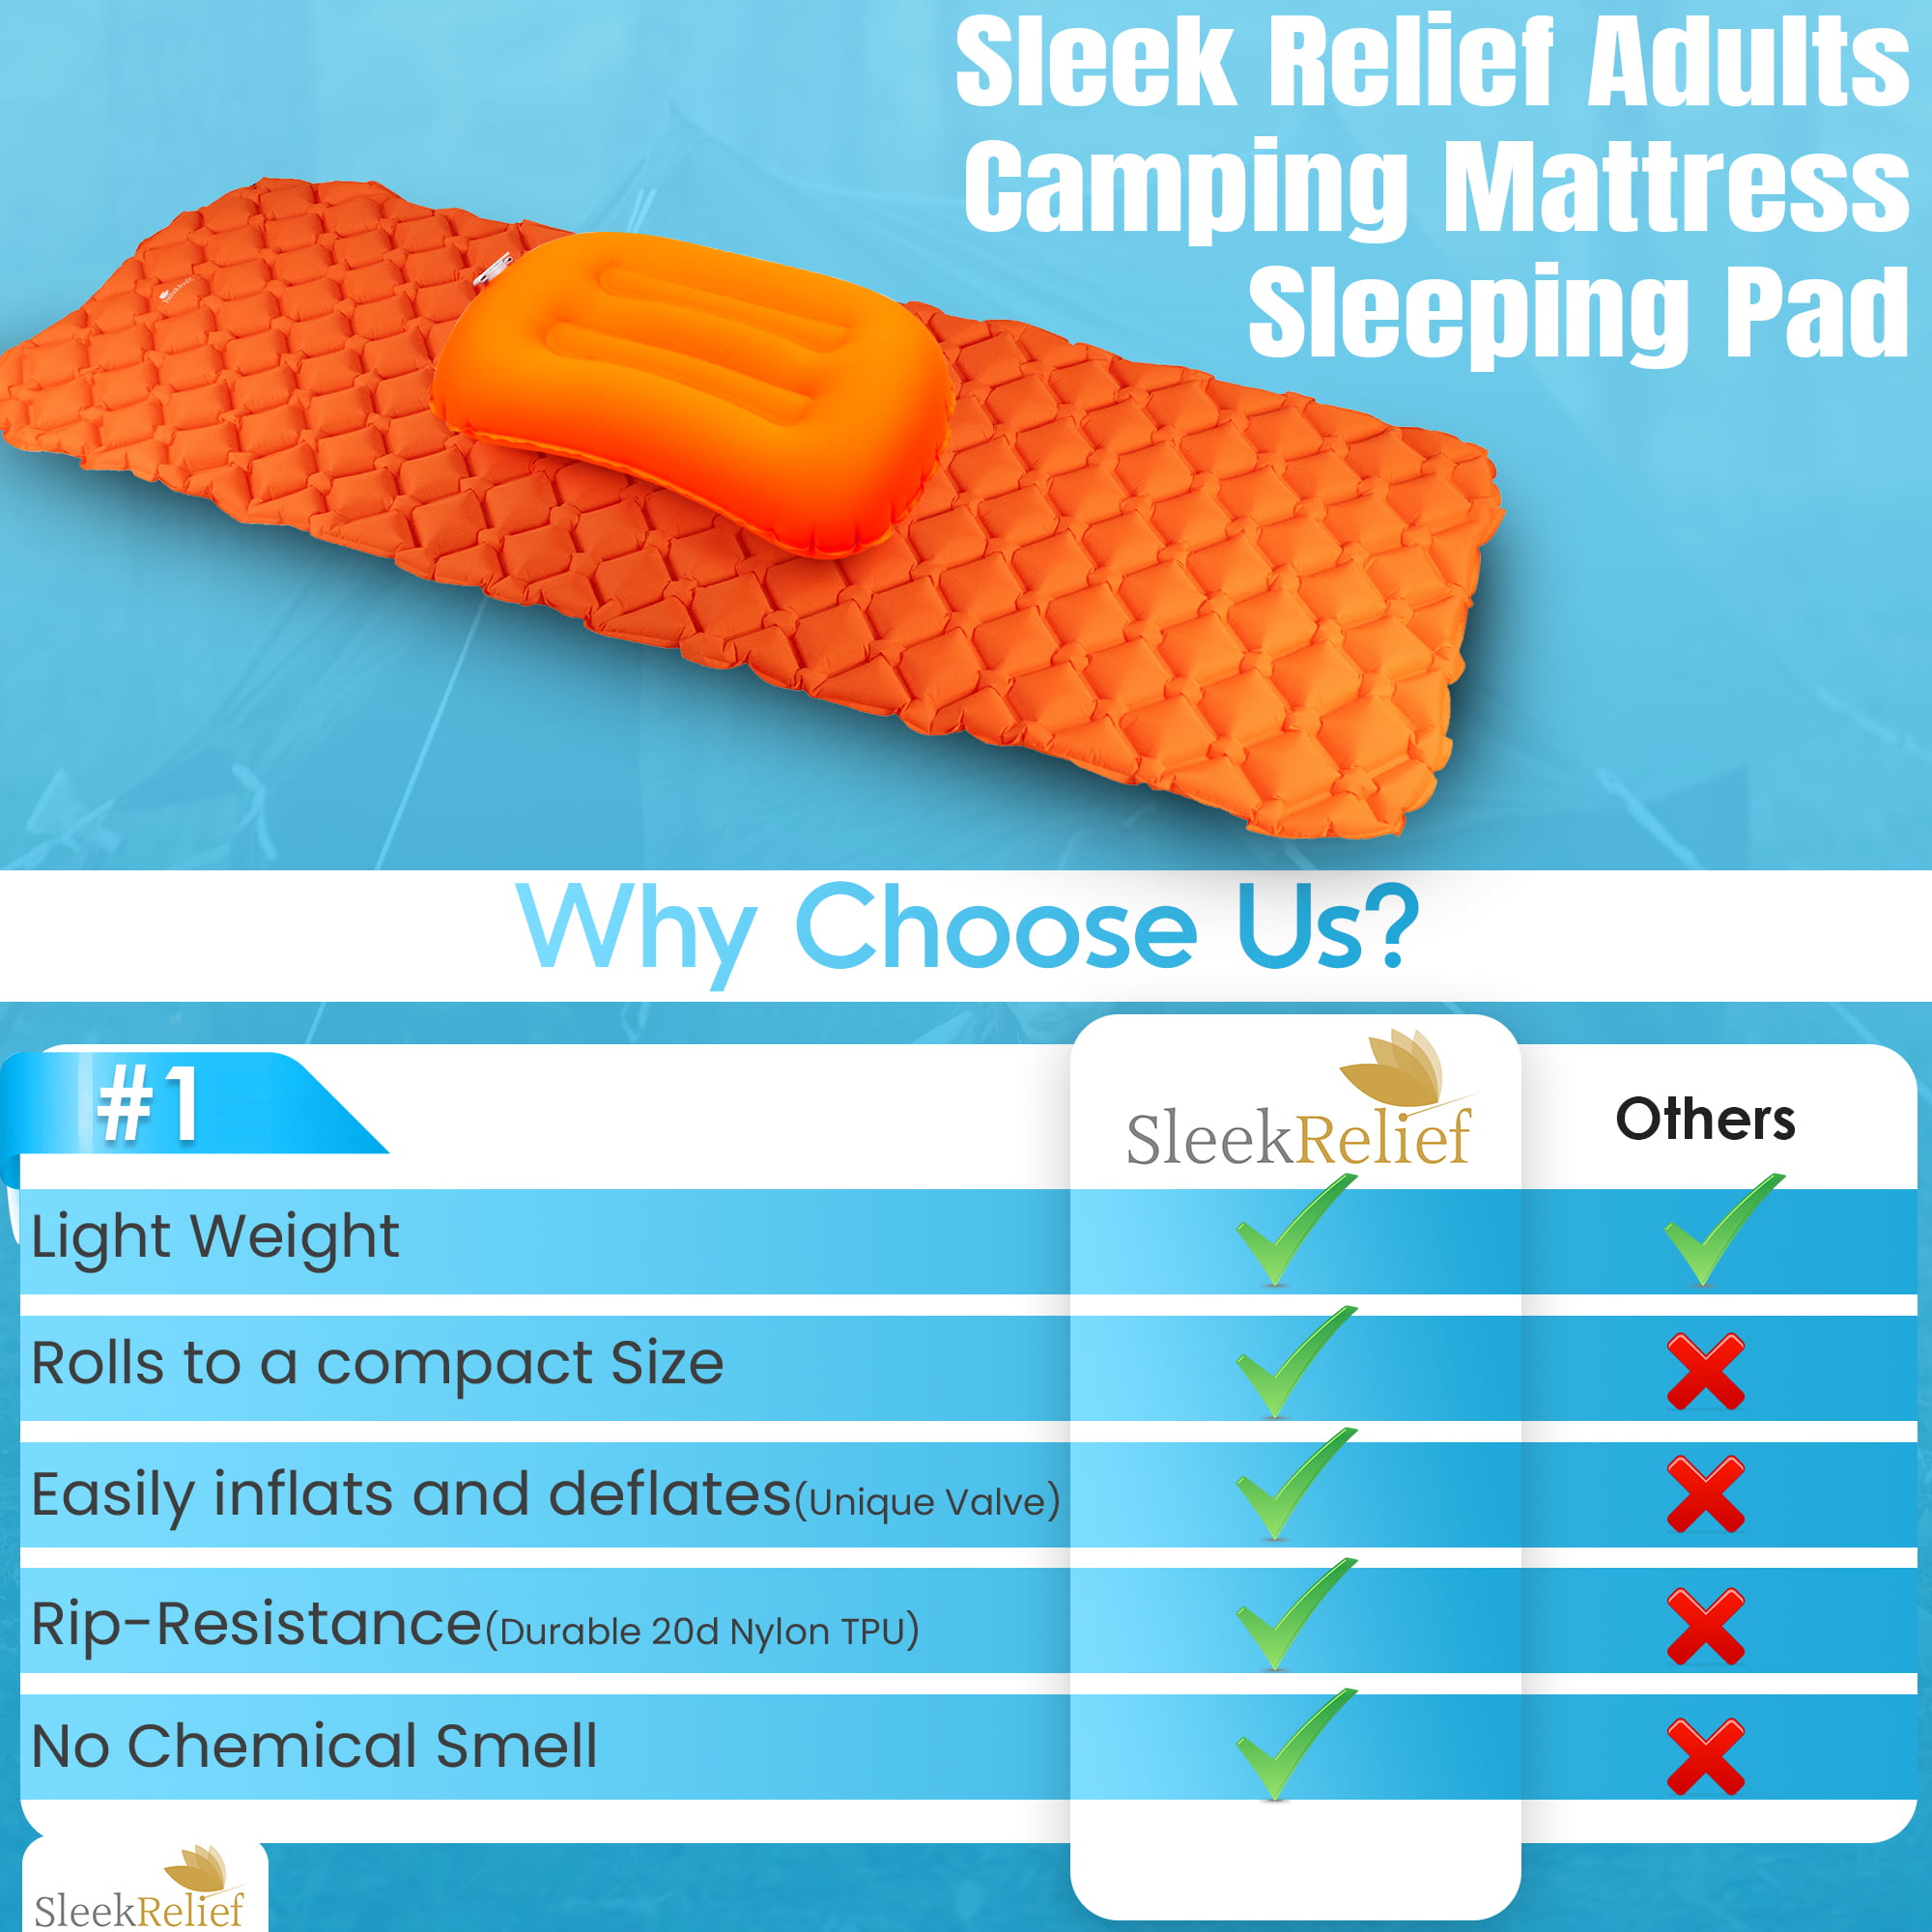 Sleek Relief Adults Camping Mattress Sleeping Pad W/ Pillow– Large) Waterproof, Cool Sleeping Pads For Backpacking,air Bed Hiking, Air Mattress, Lightweight, Inflatable & Compact, Orange Walmart.com